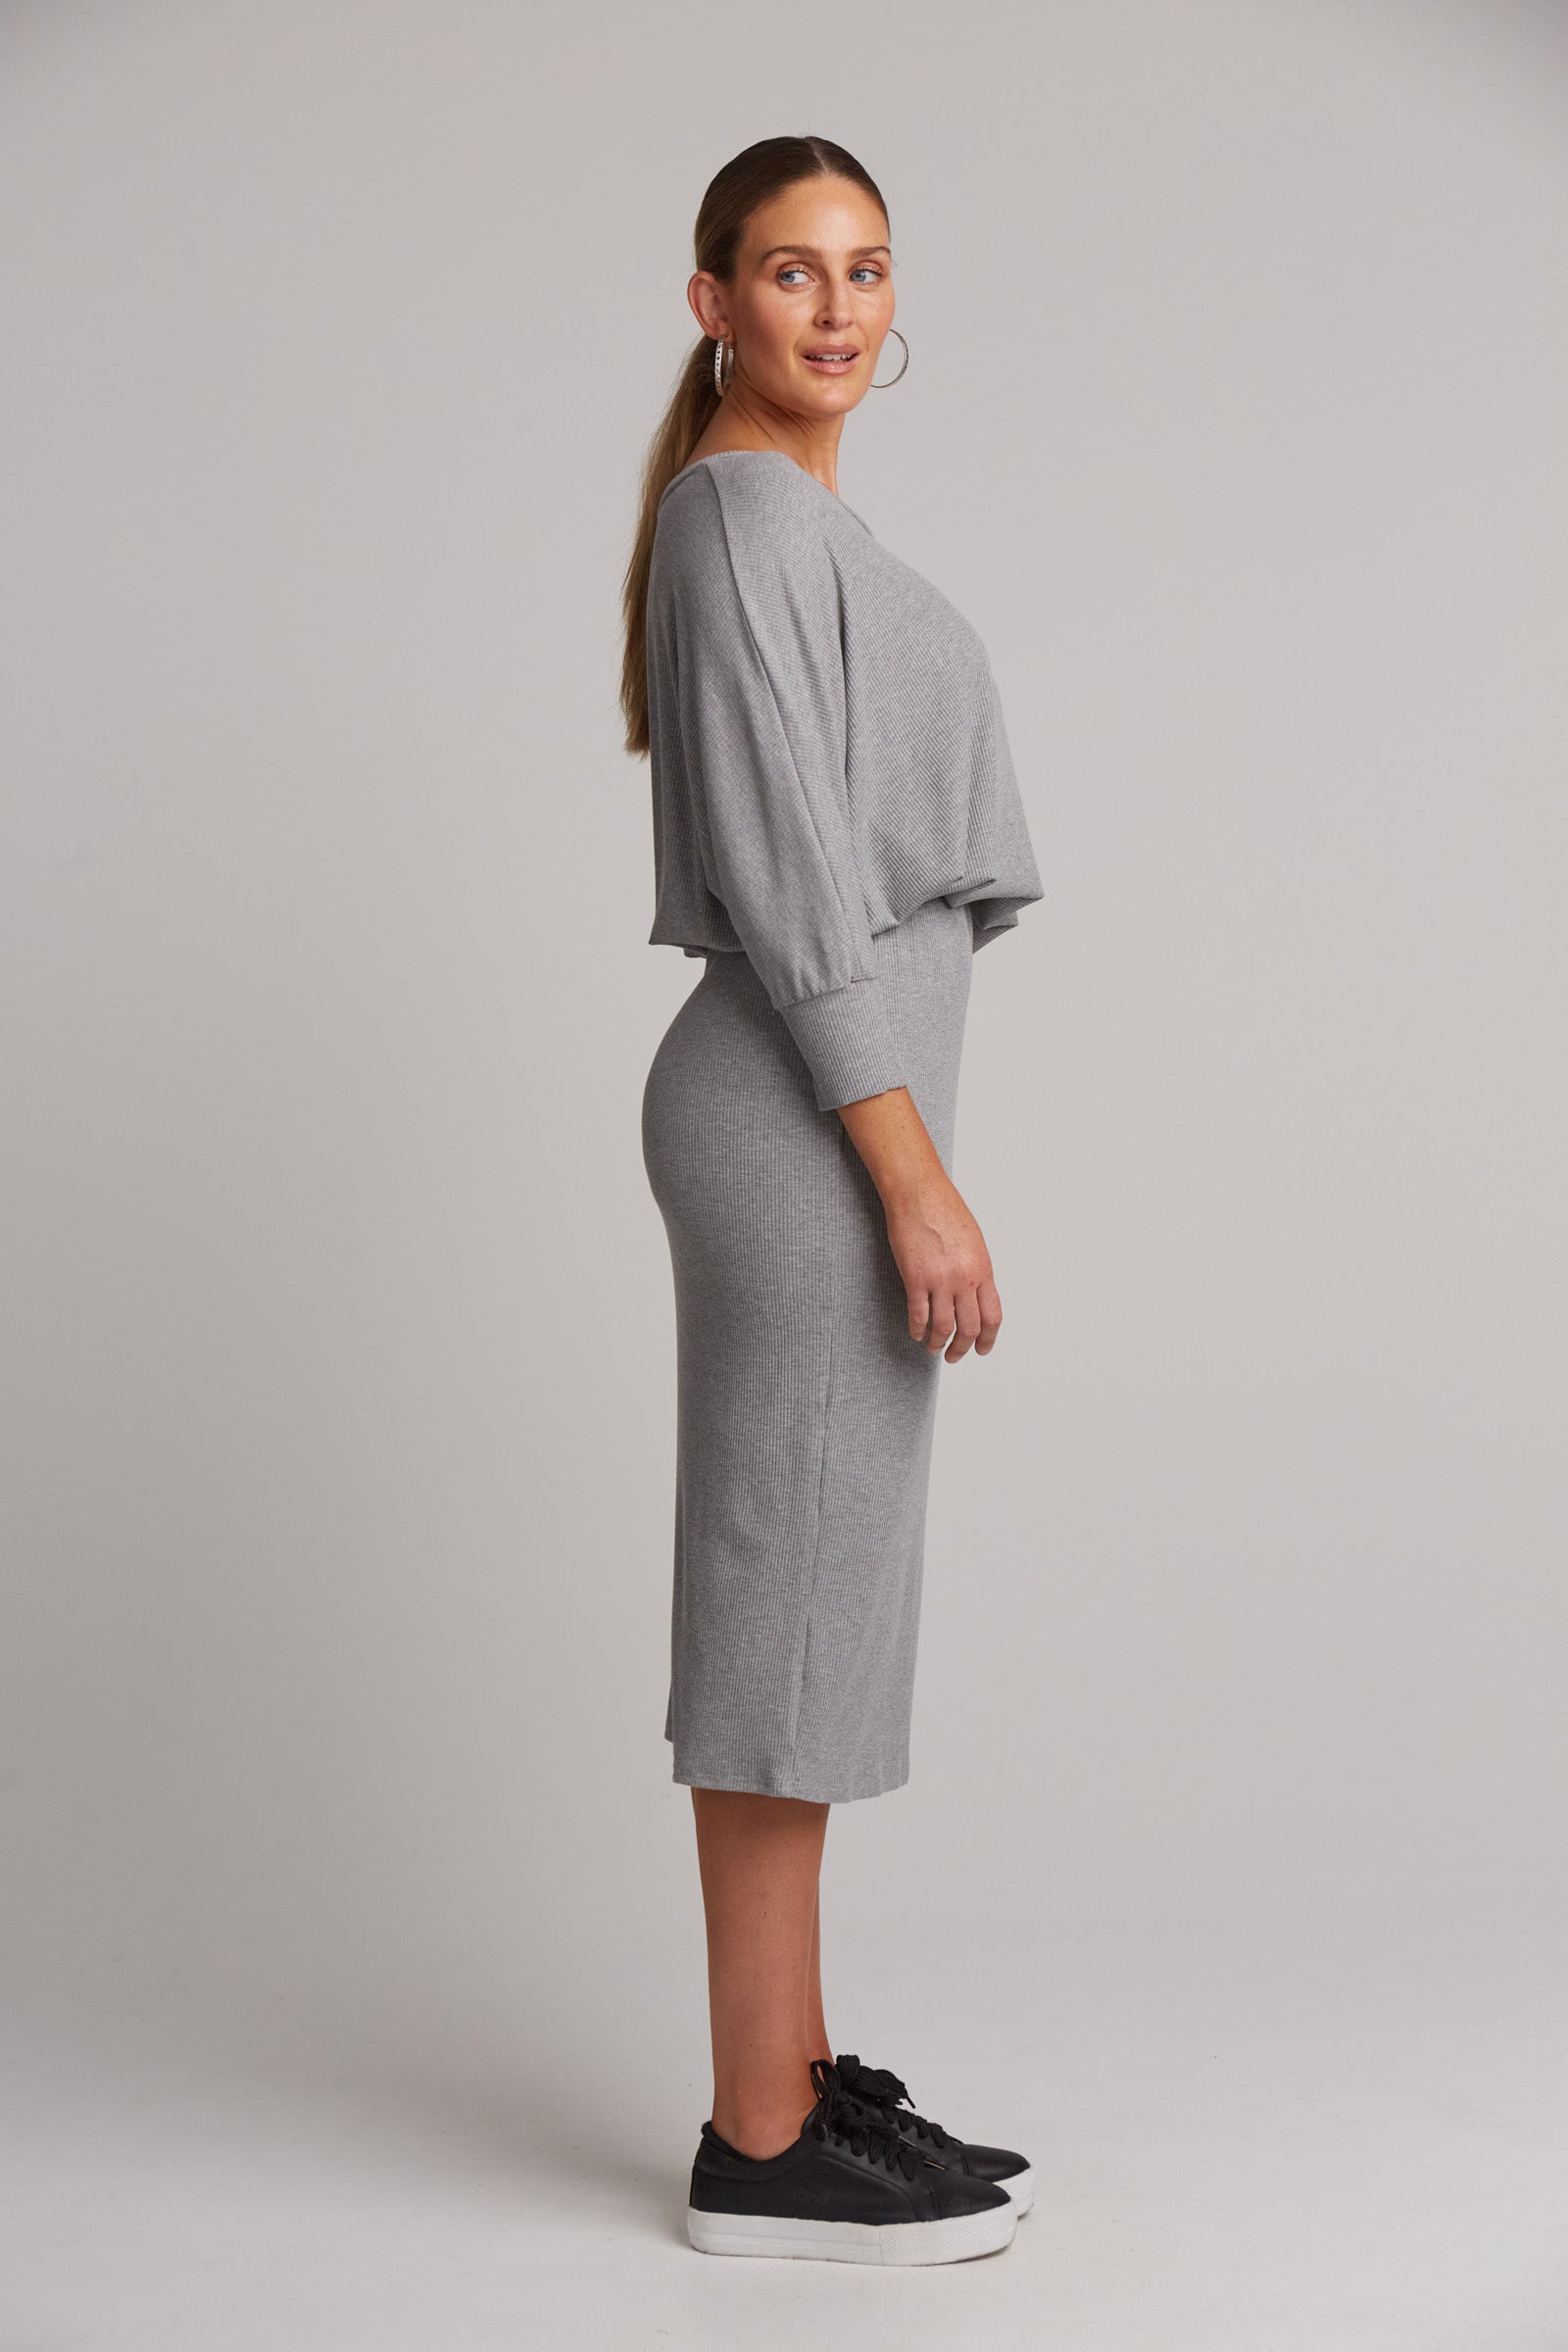 Studio Jersey Skirt - Gray - eb&ive Clothing - Skirt Mid